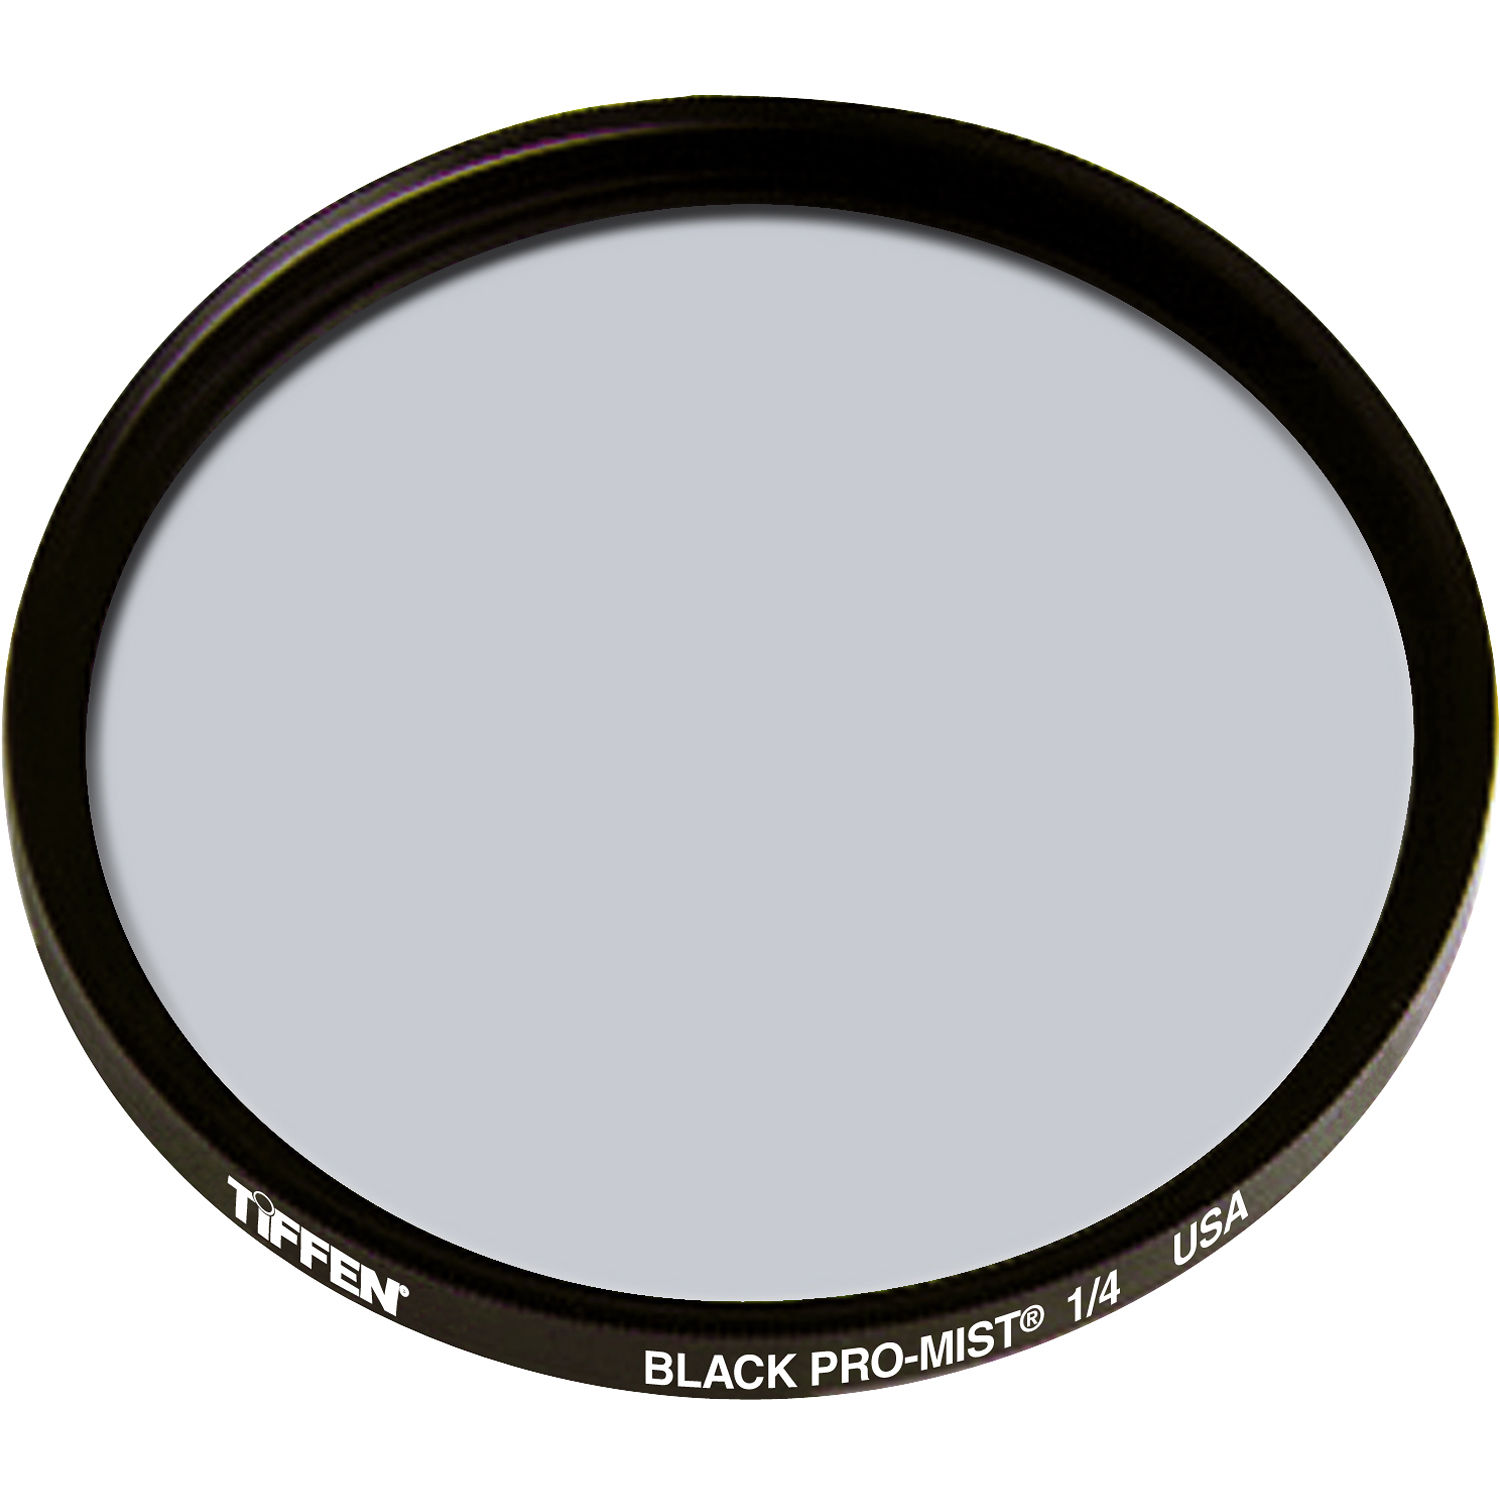 Tiffen 55mm Black Pro-Mist 1/4 Filter